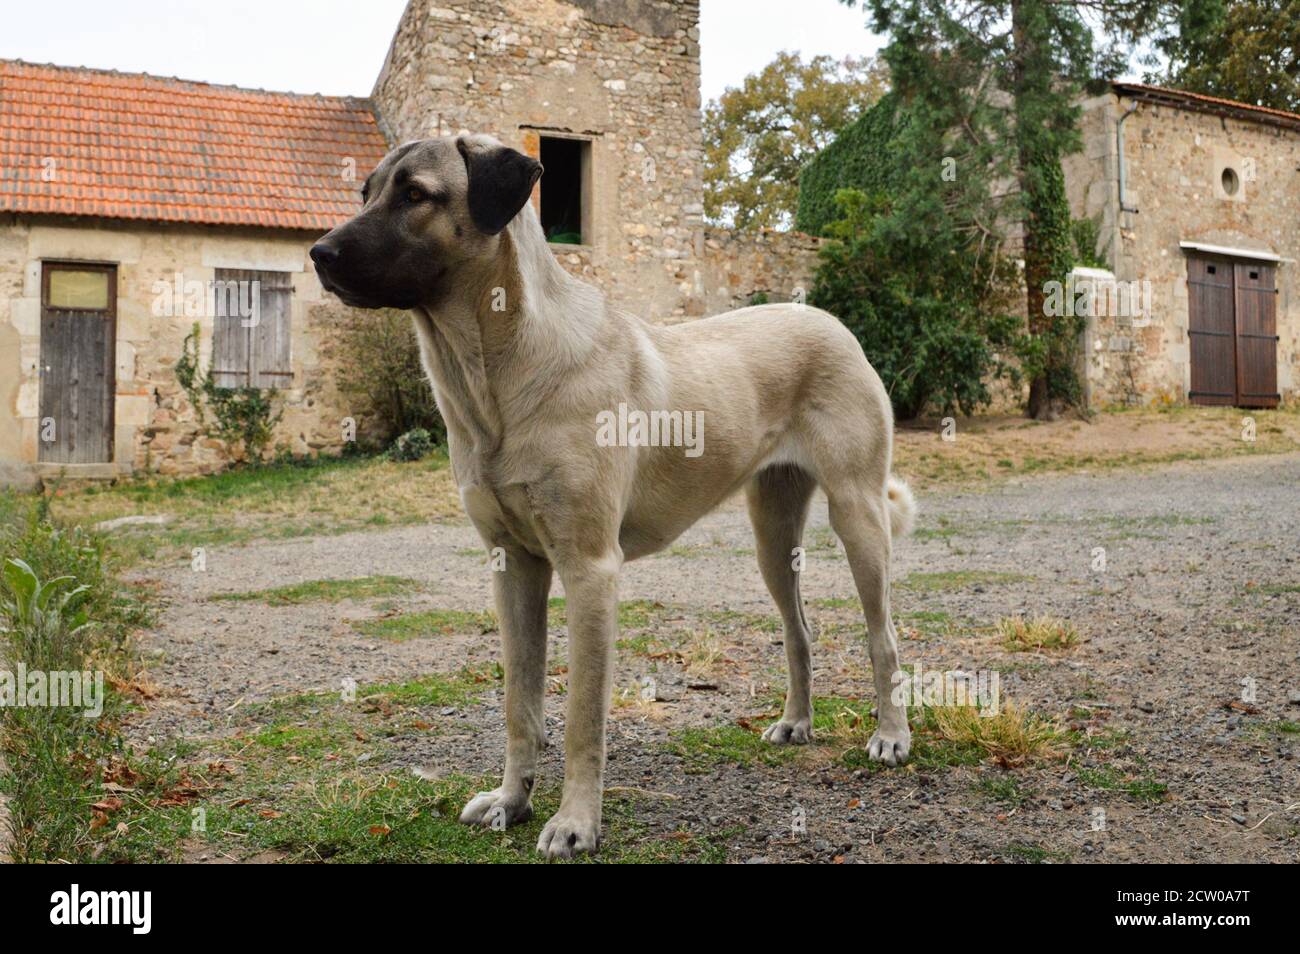 Beautiful Anatolian shepherd dog. This is a sheep dog and a large breed dog. Stock Photo